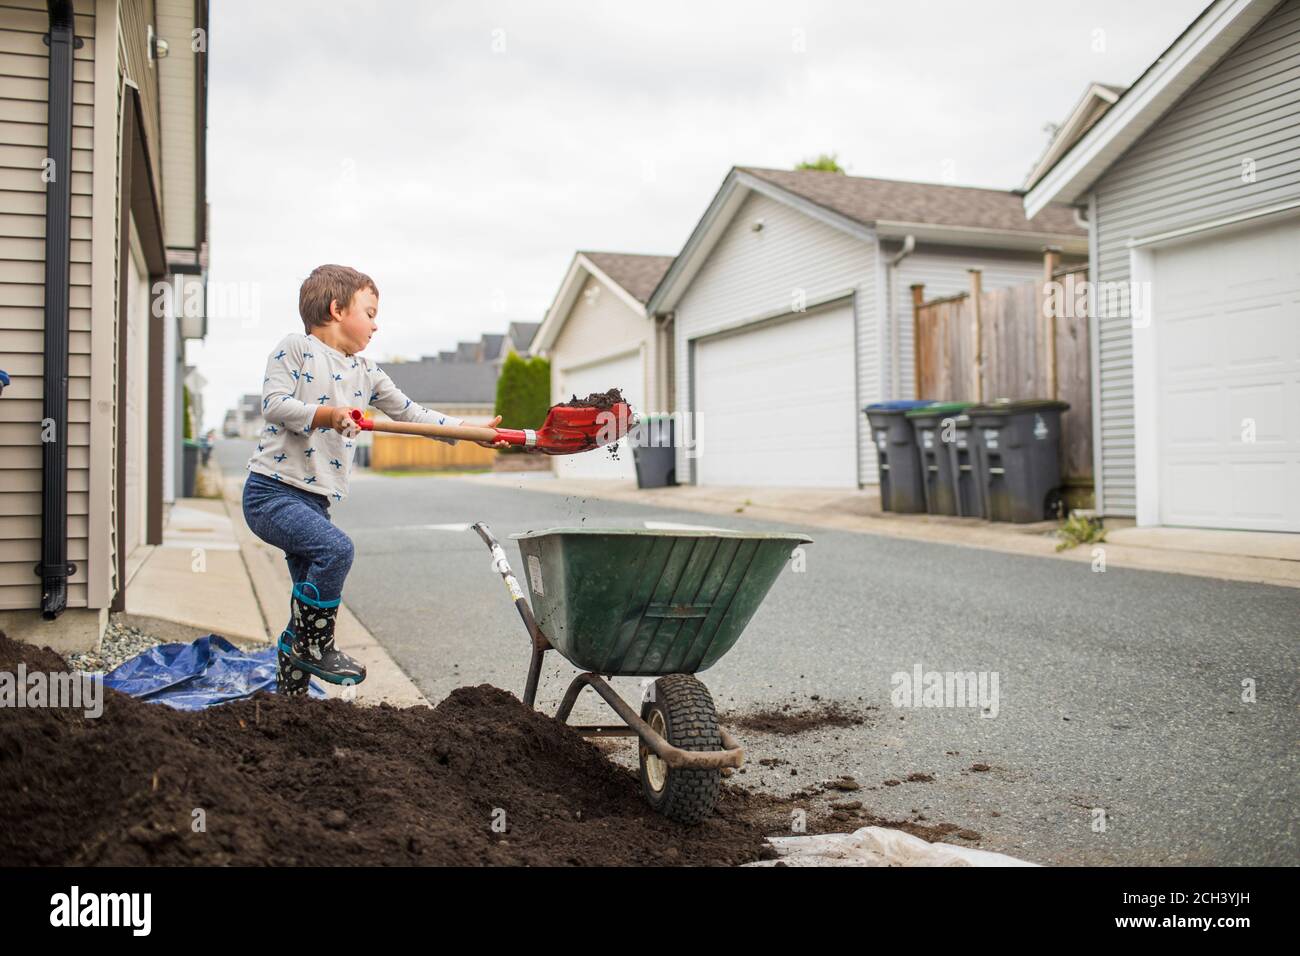 Young boy lifting shovel of dirt into wheelbarrow in back alley Stock Photo